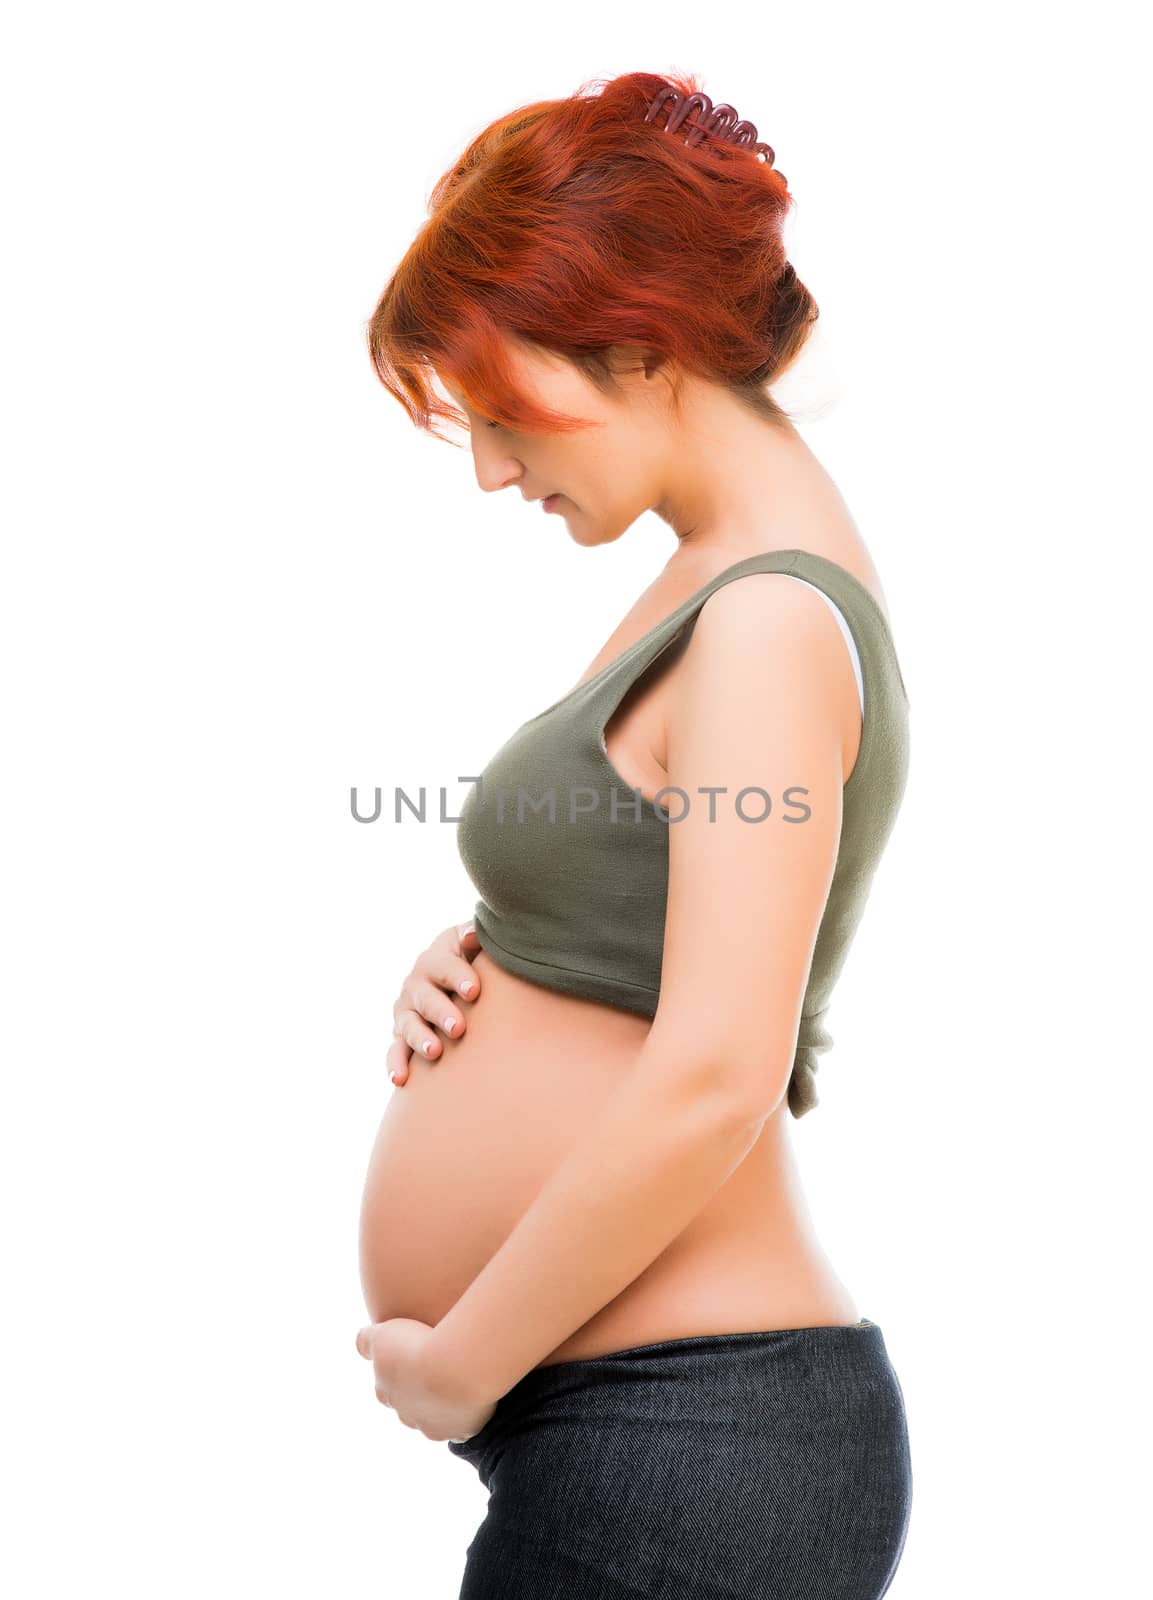 Beautiful pregnant woman by GekaSkr